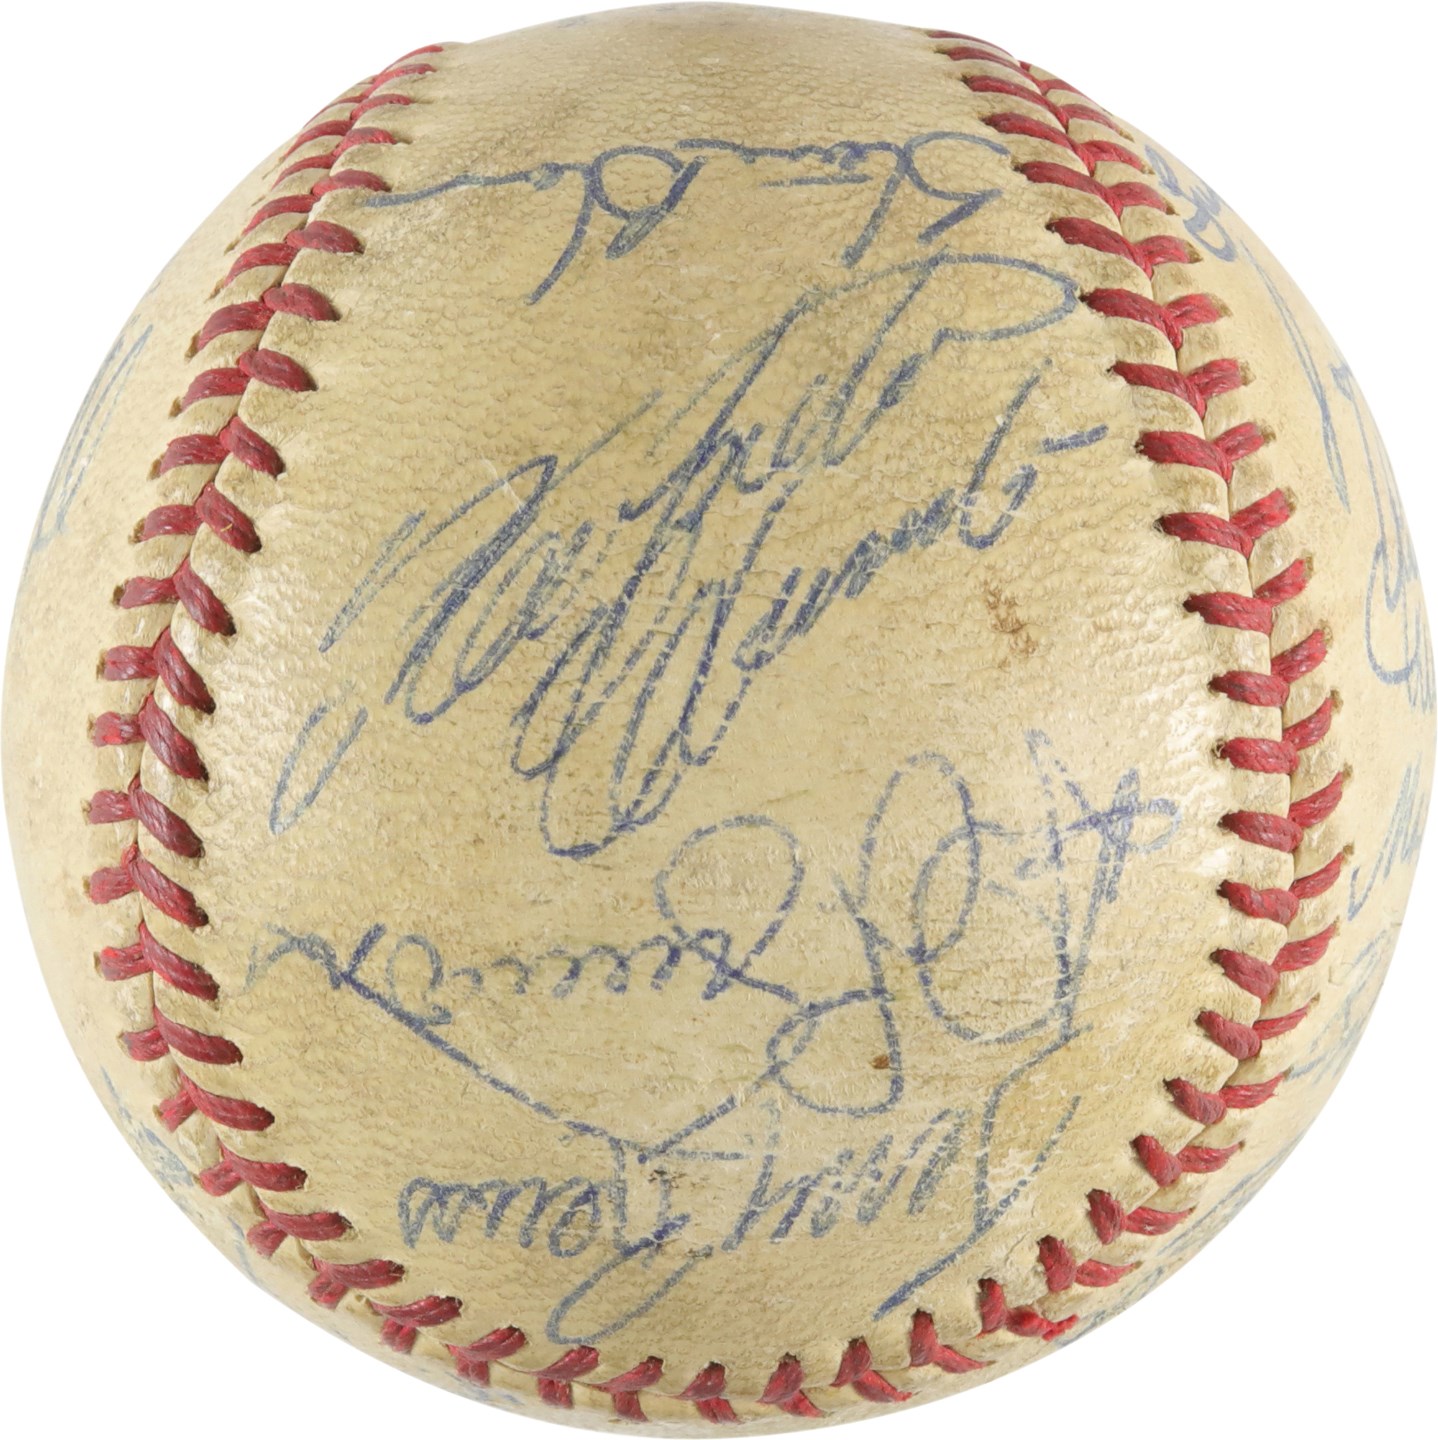 Baseball Autographs - 1971 Pirates & Cardinals Team Signed Baseball w/Roberto Clemente (PSA)